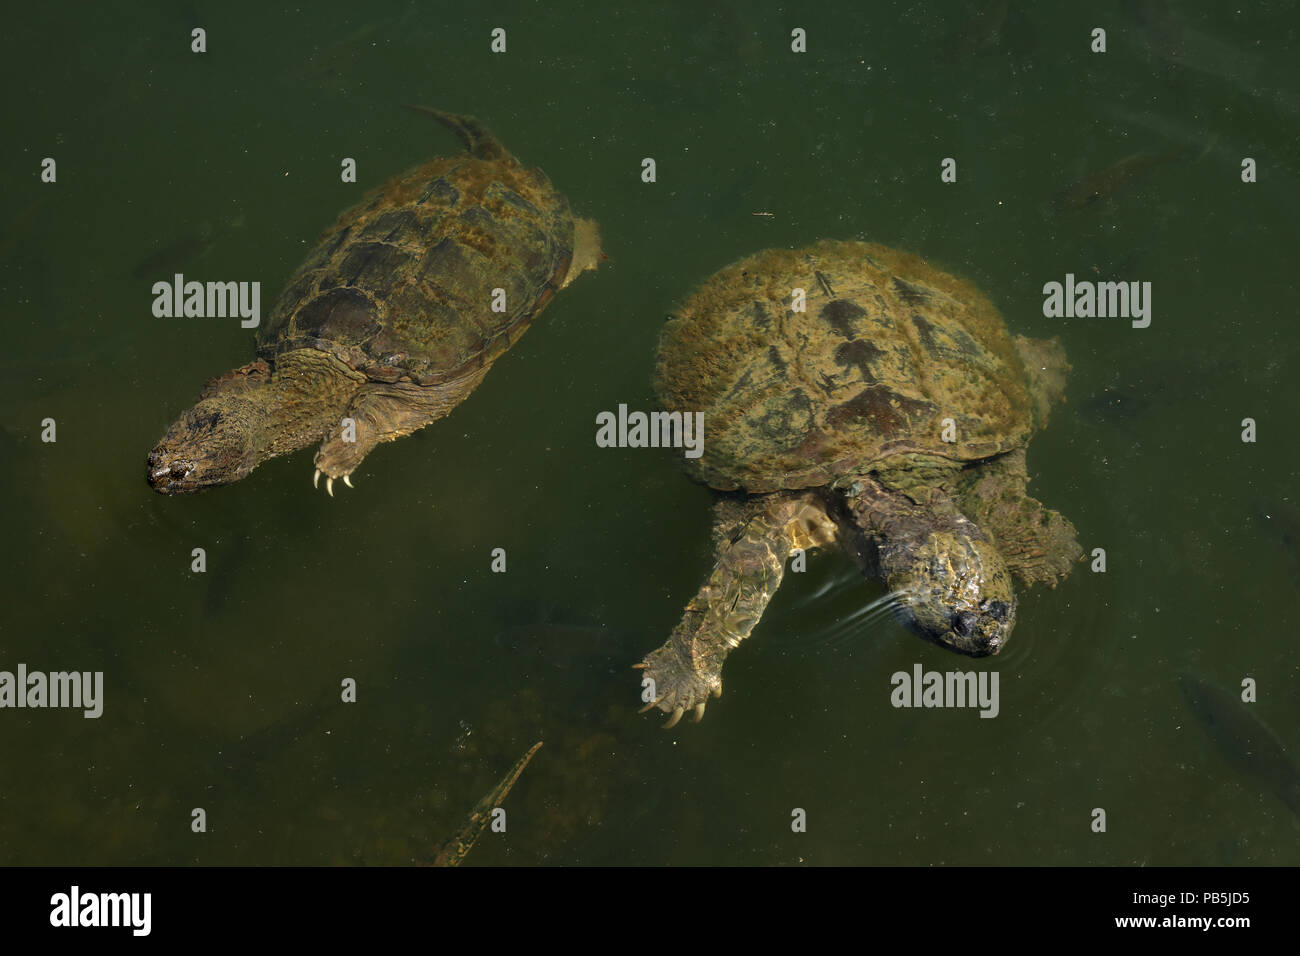 snapping turtles, Chelydra serpentina, Maryland Stock Photo